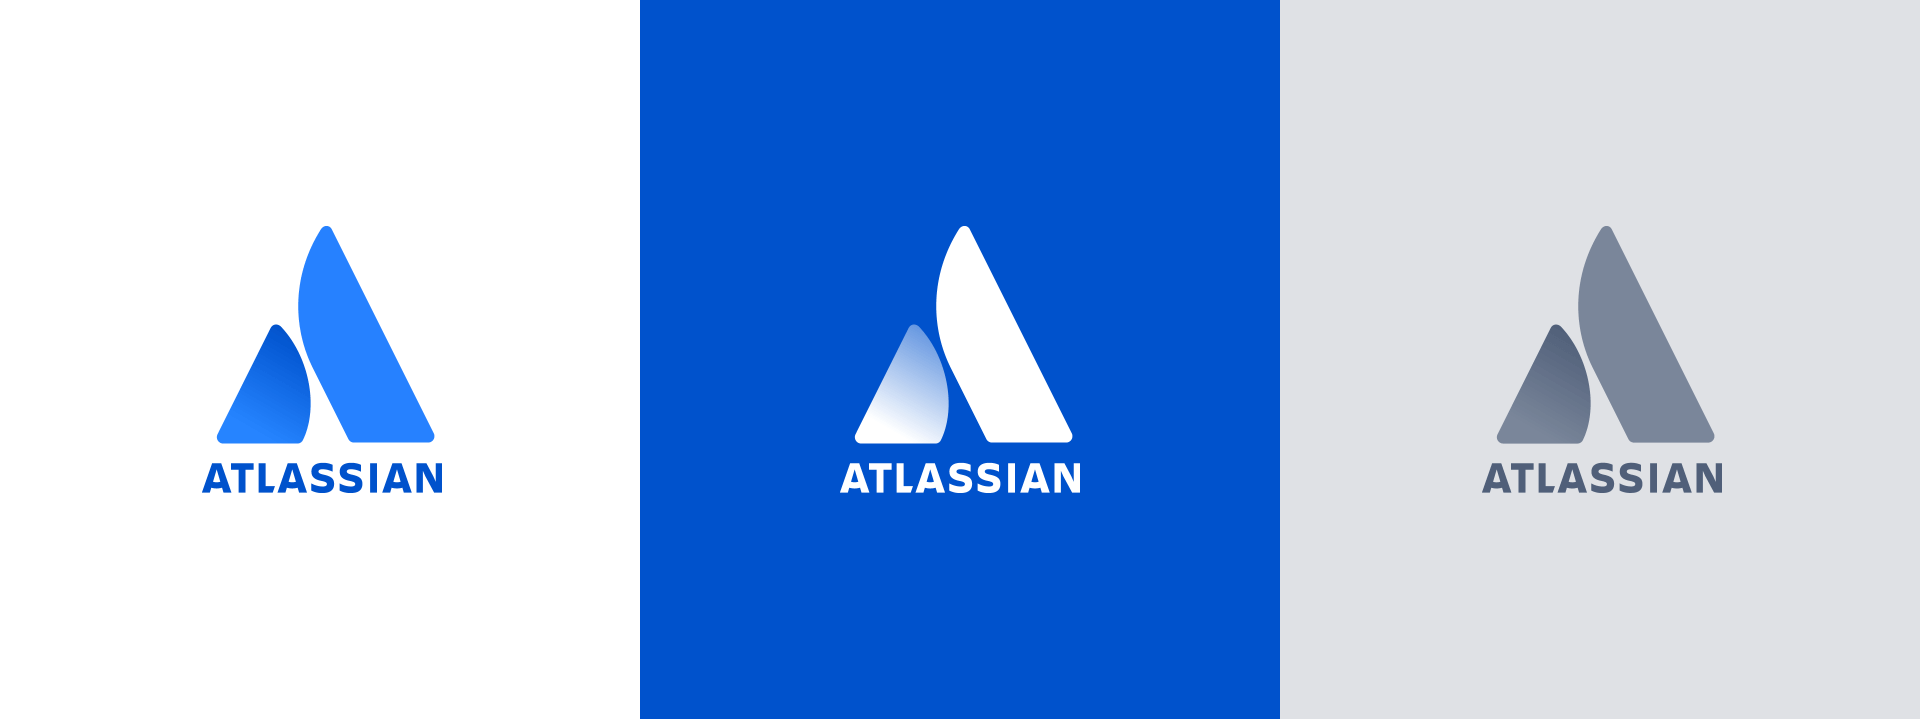 Grey, white and blue 'A' Atlassian logos. 